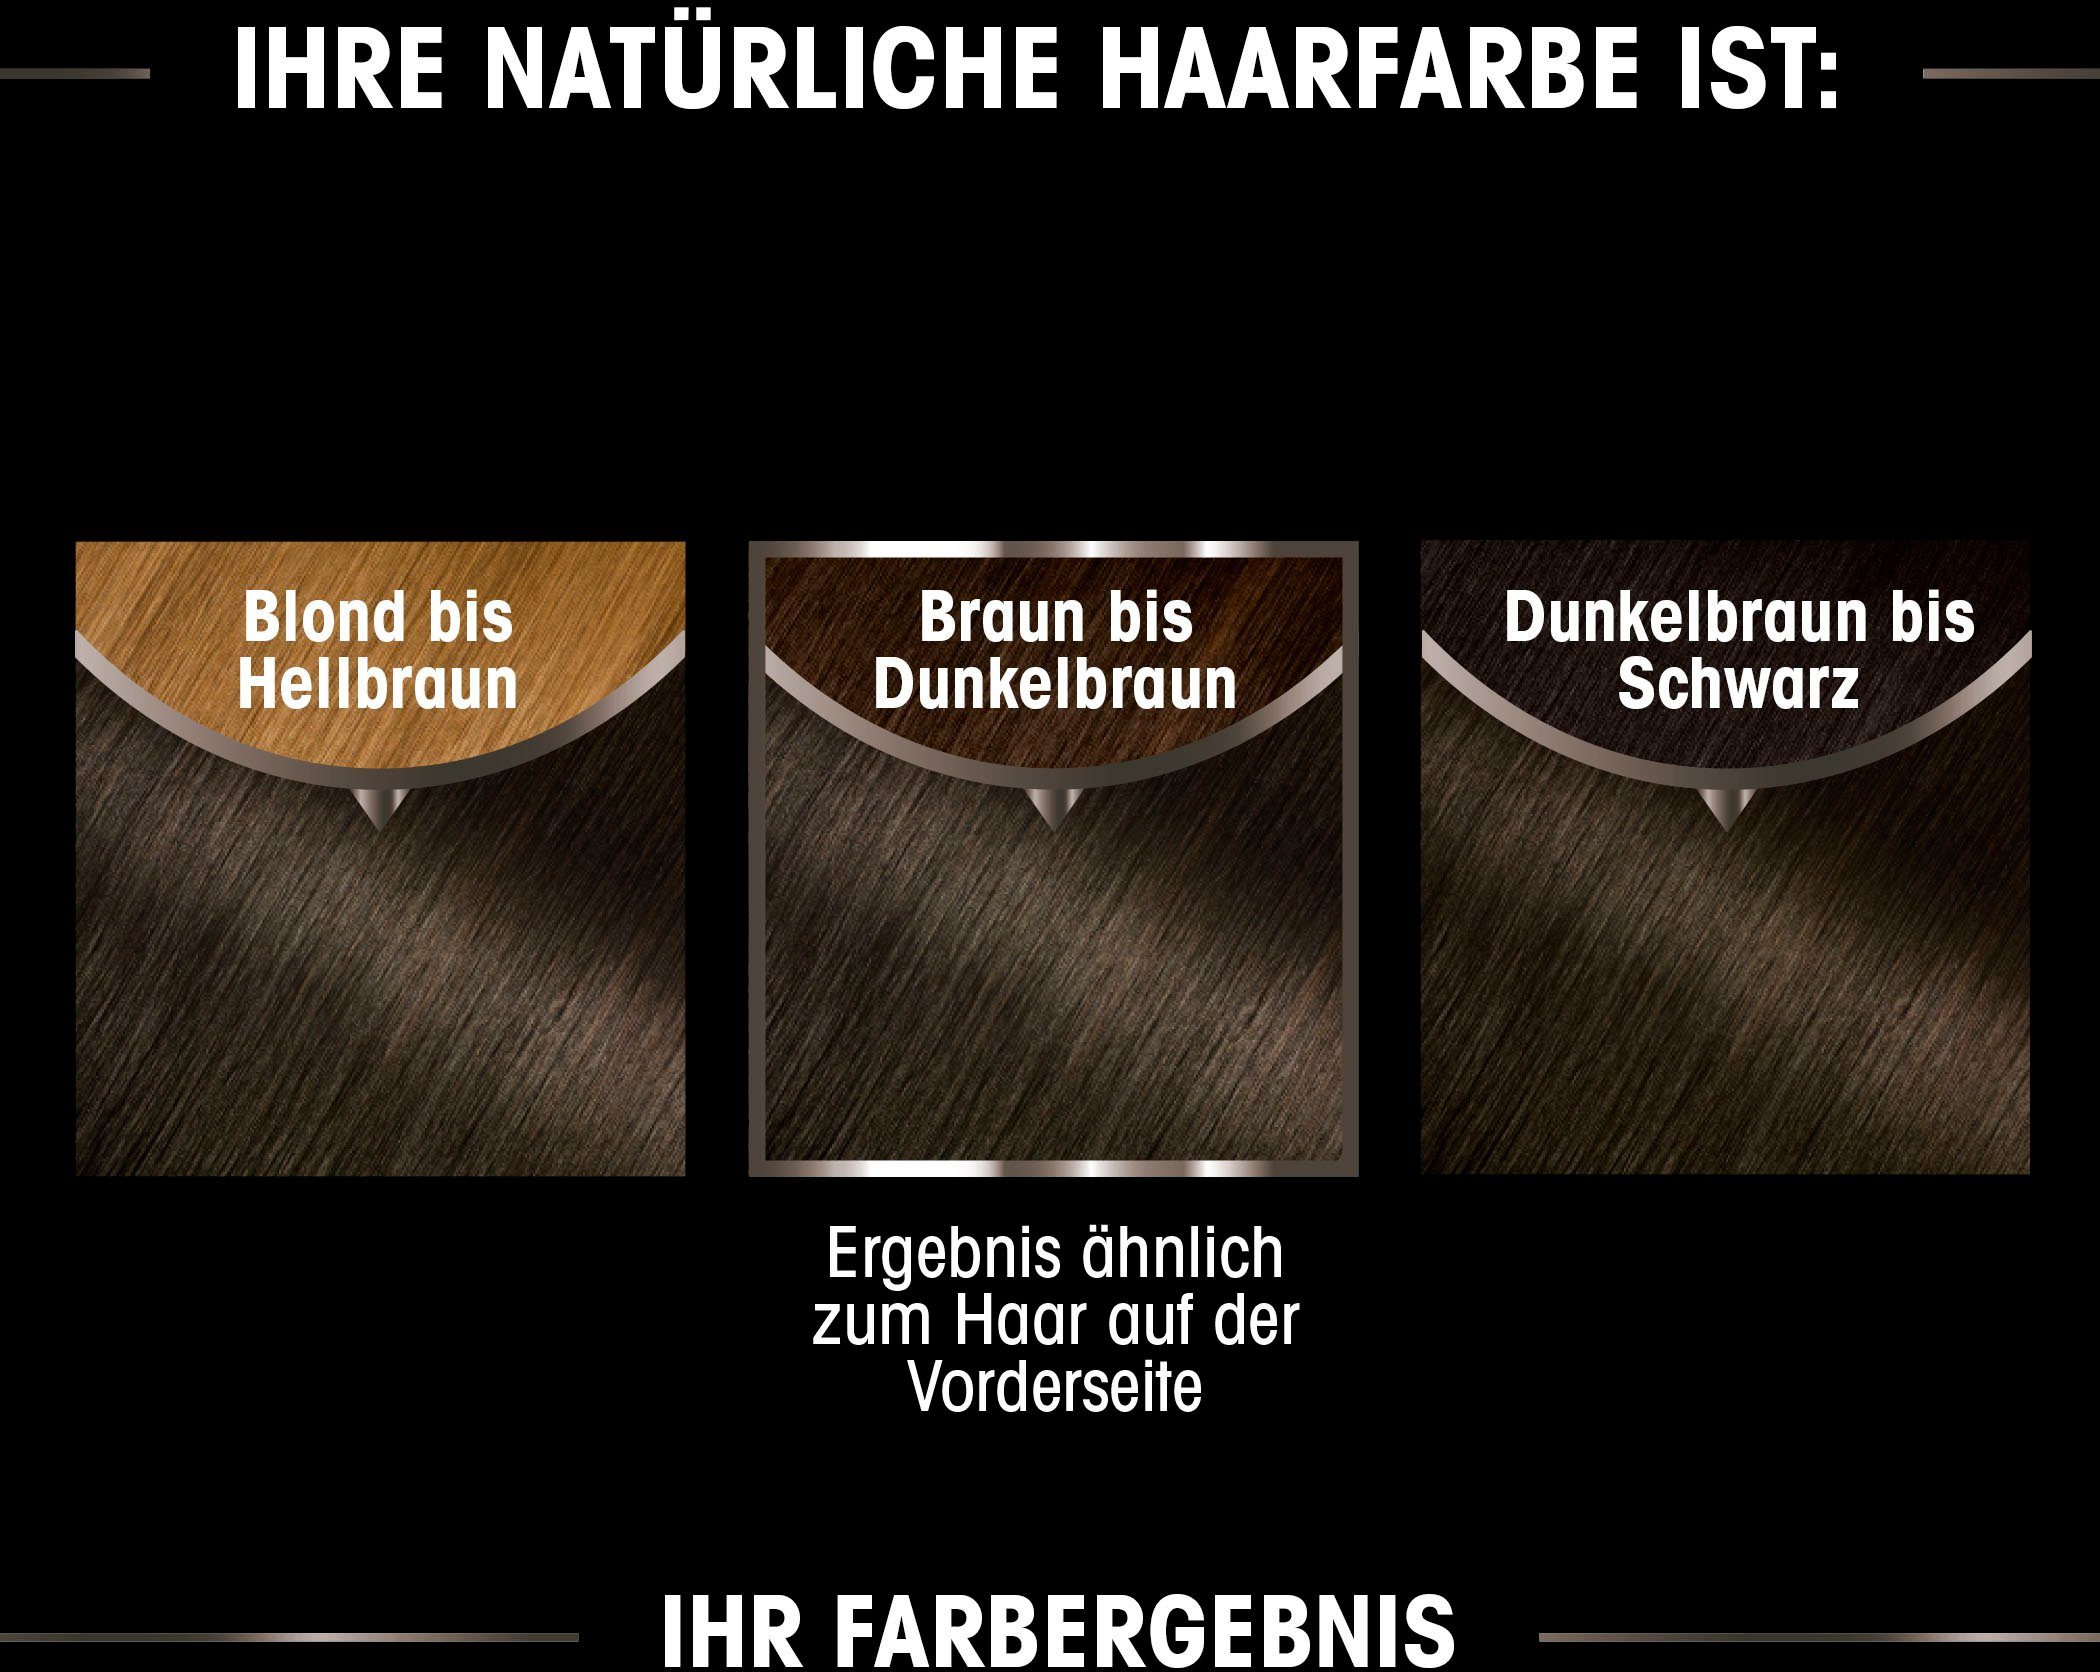 GARNIER Coloration Garnier Olia Ölbasis 3-tlg., Haarfarbe, Set, dauerhafte